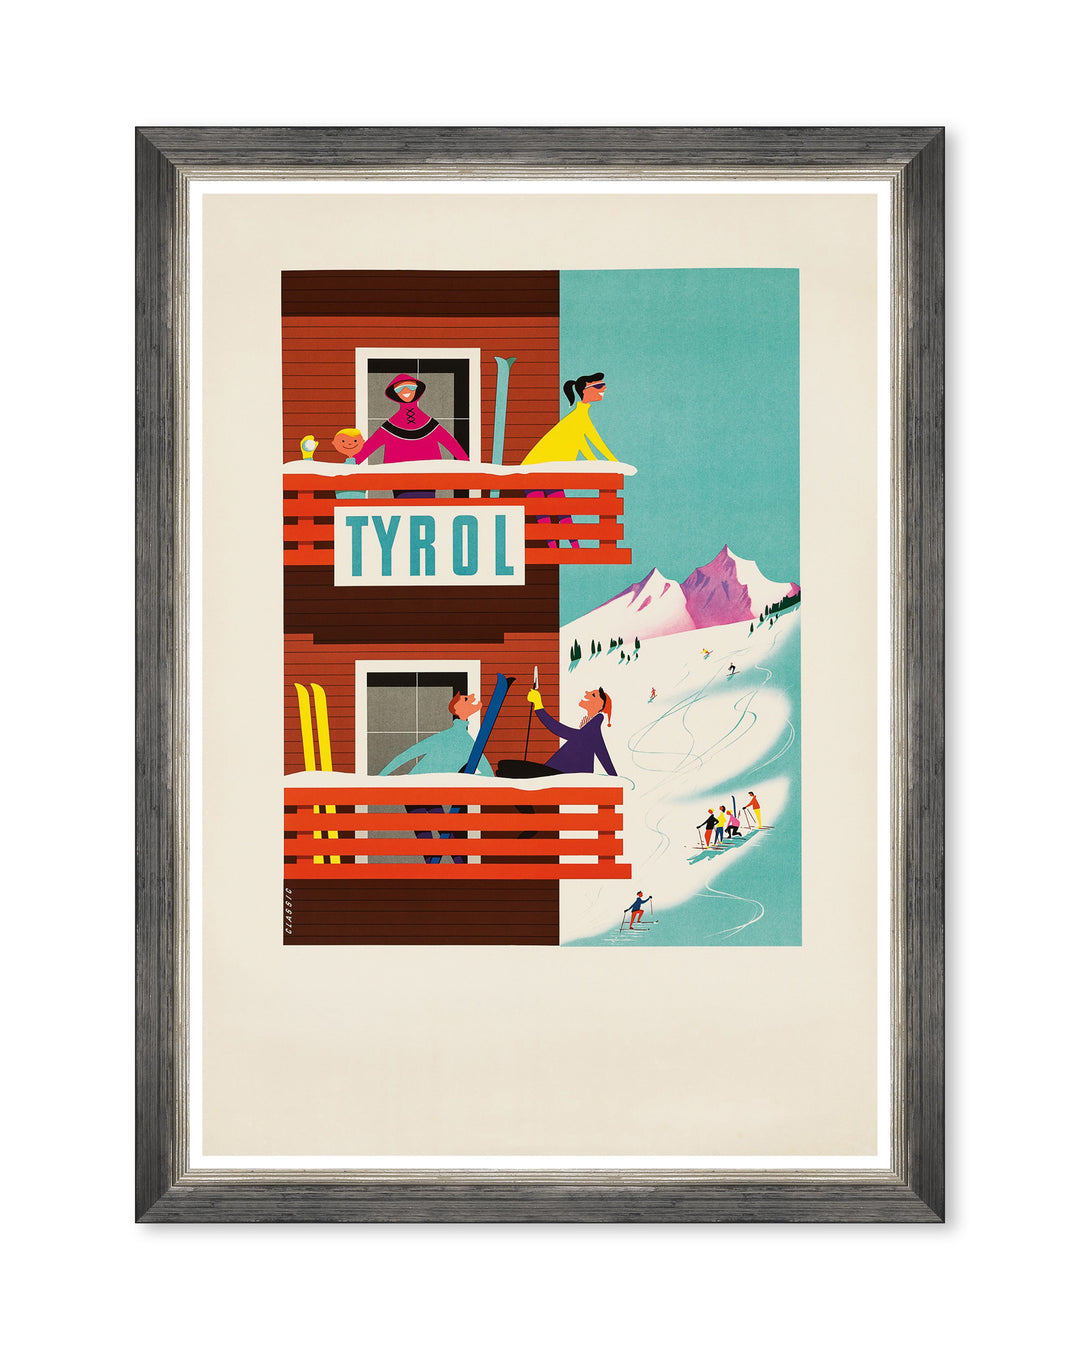 mind-the-gap-tyrol-framed-art-print-vintage-illustration-skiers-holiday